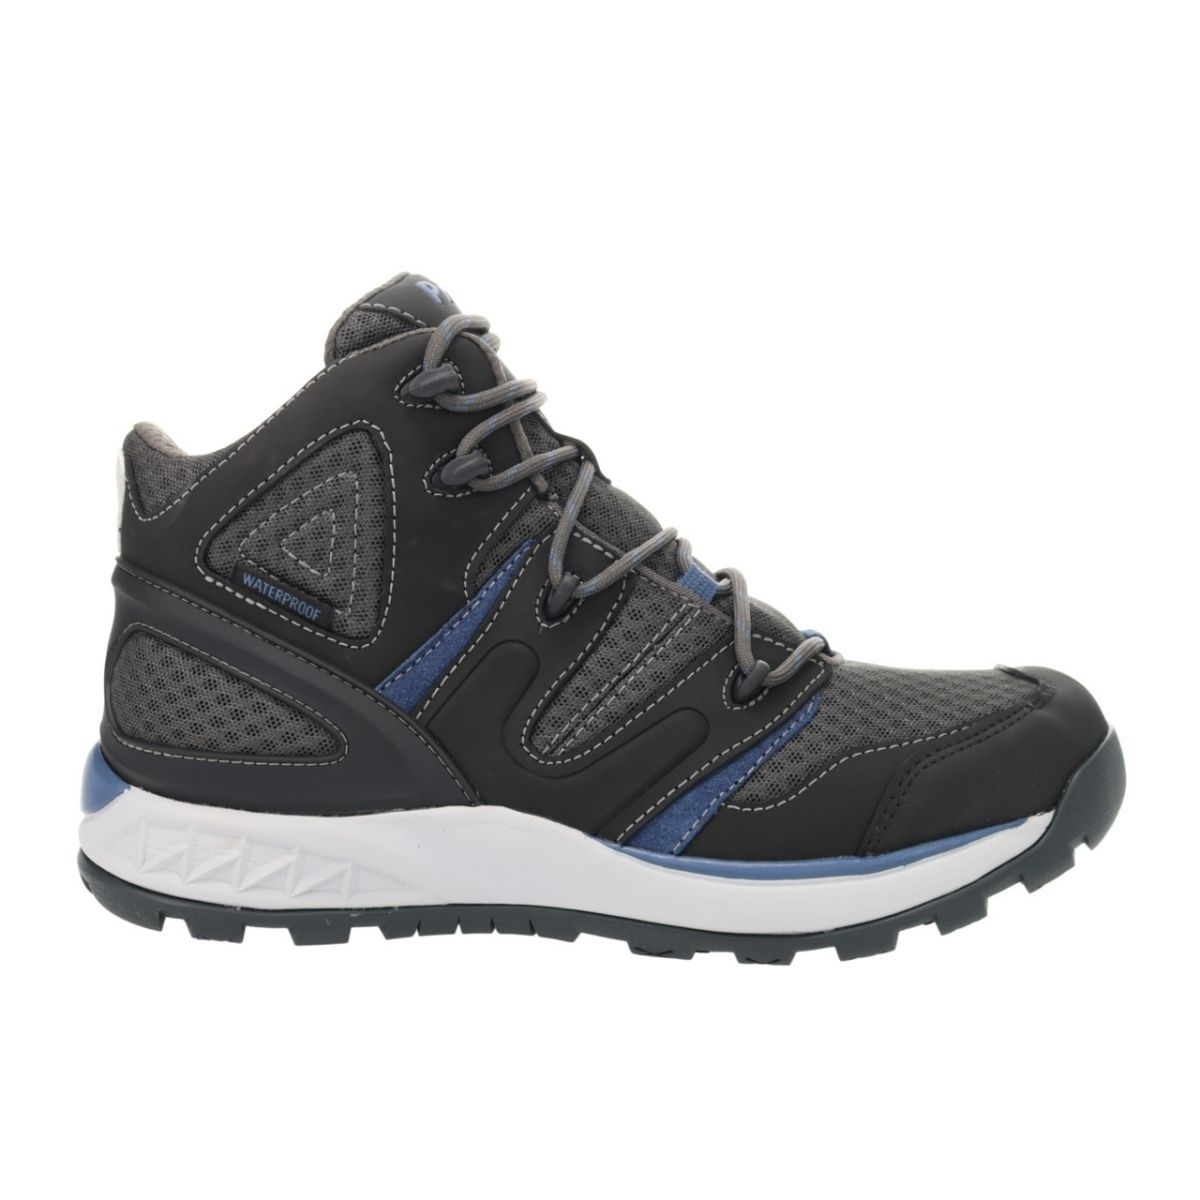 Propet Men's Veymont Waterproof Hiking Boot Grey/Blue - MOA022SGRB GREY/BLUE - GREY/BLUE, 12 X-Wide